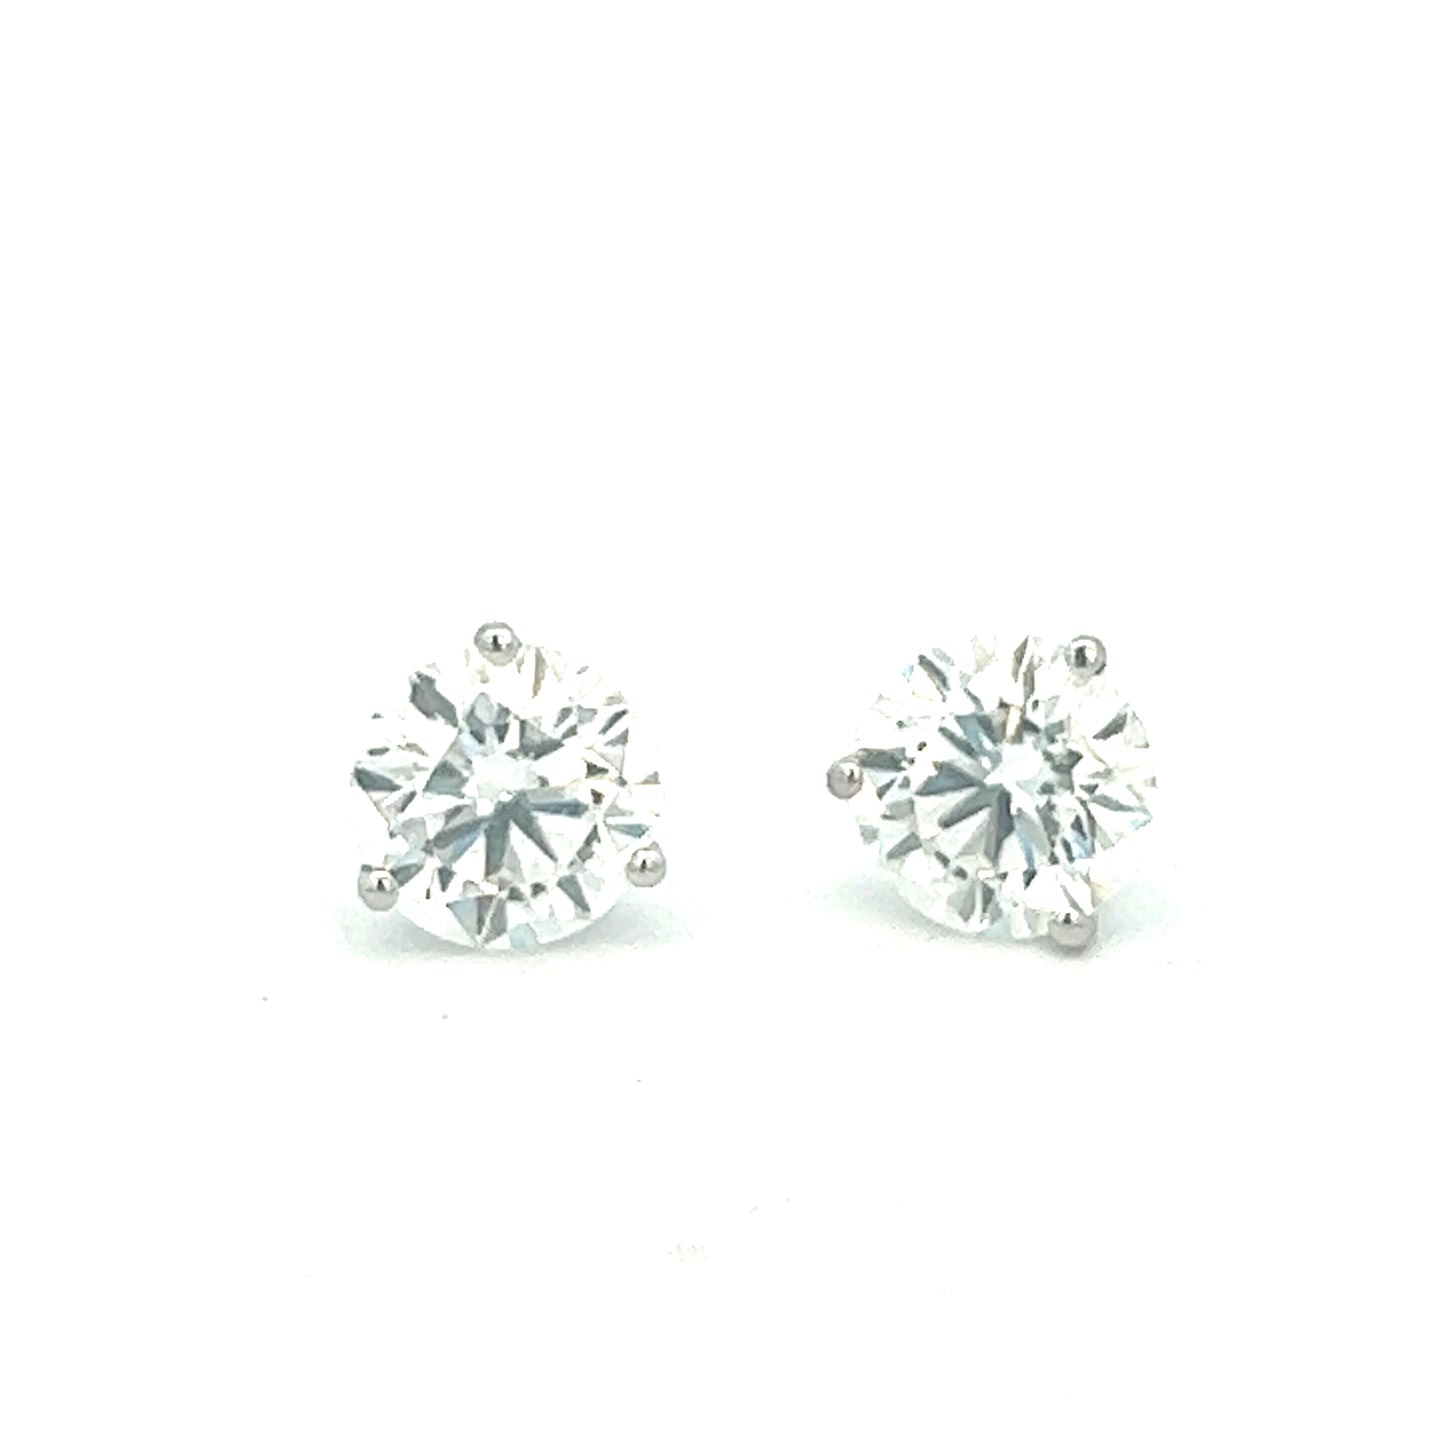 Captivating 5 Carat Diamond Earrings | IGI Certified Diamond | Klein's Jewelry